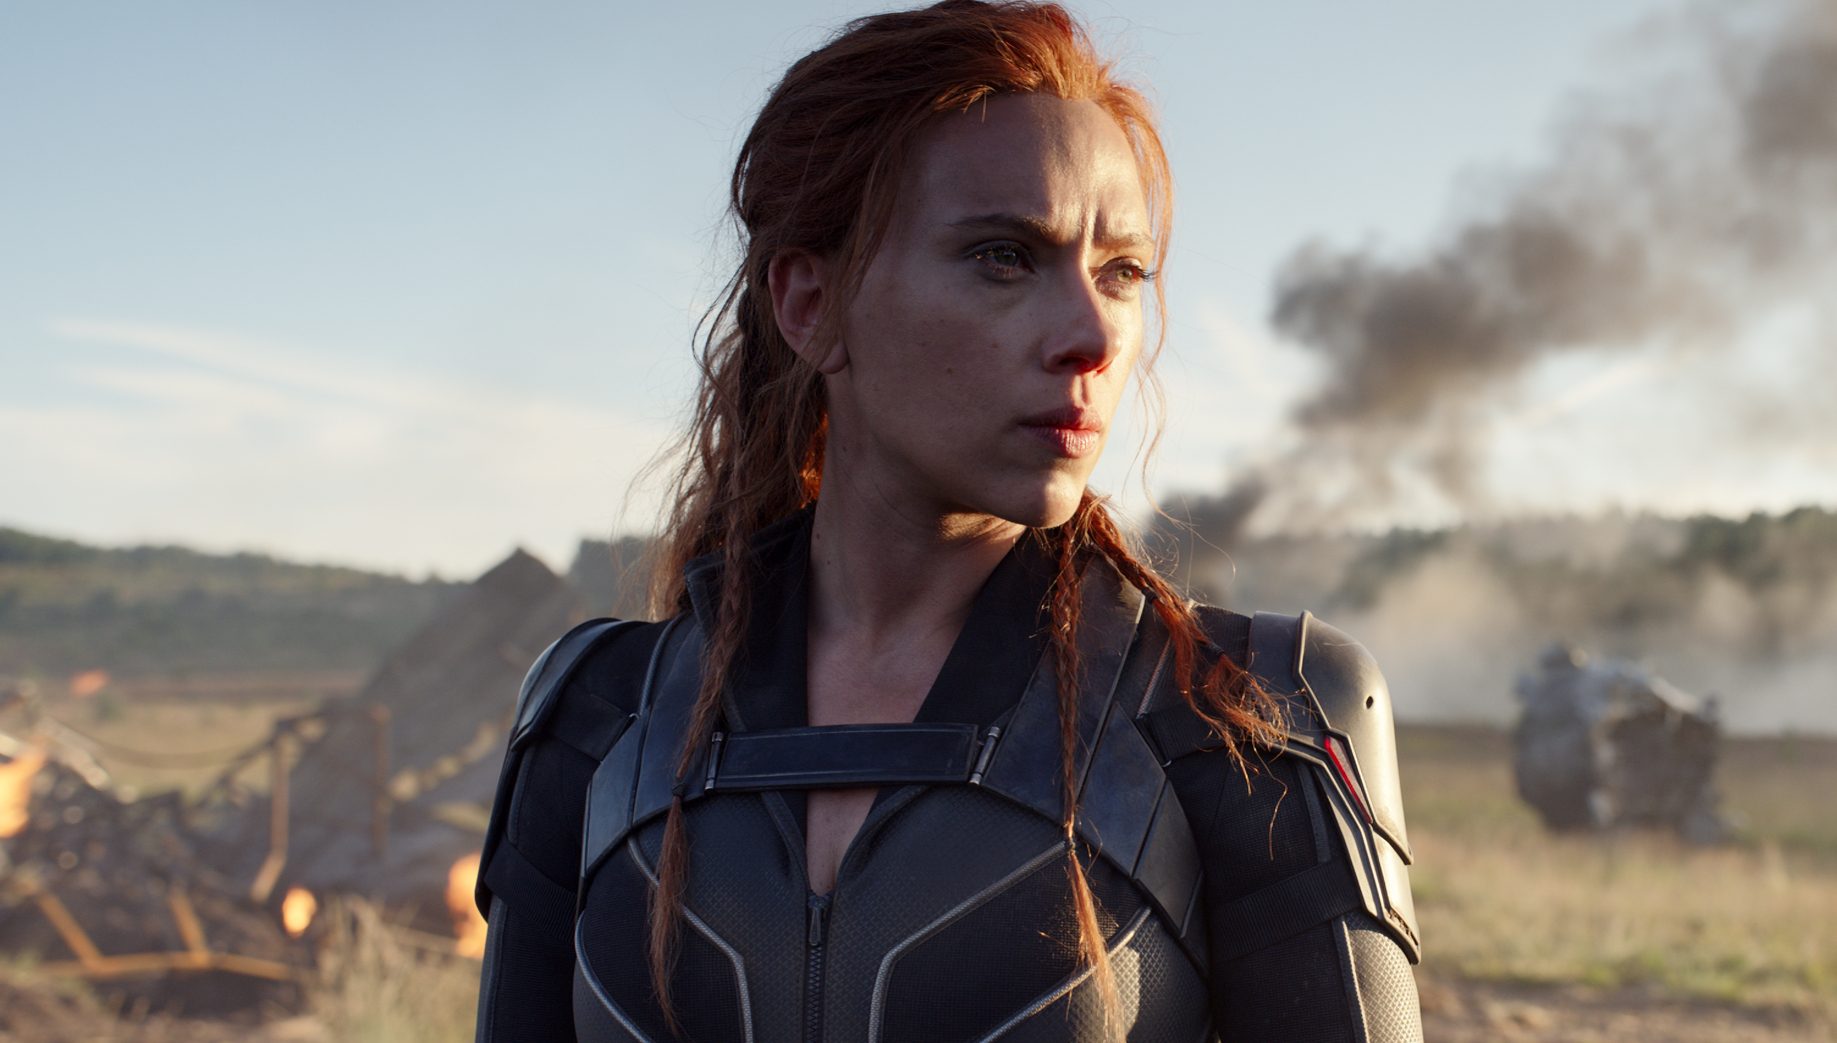 'Black Widow' star Scarlett Johansson net worth is impressive thanks to Disney's Marvel